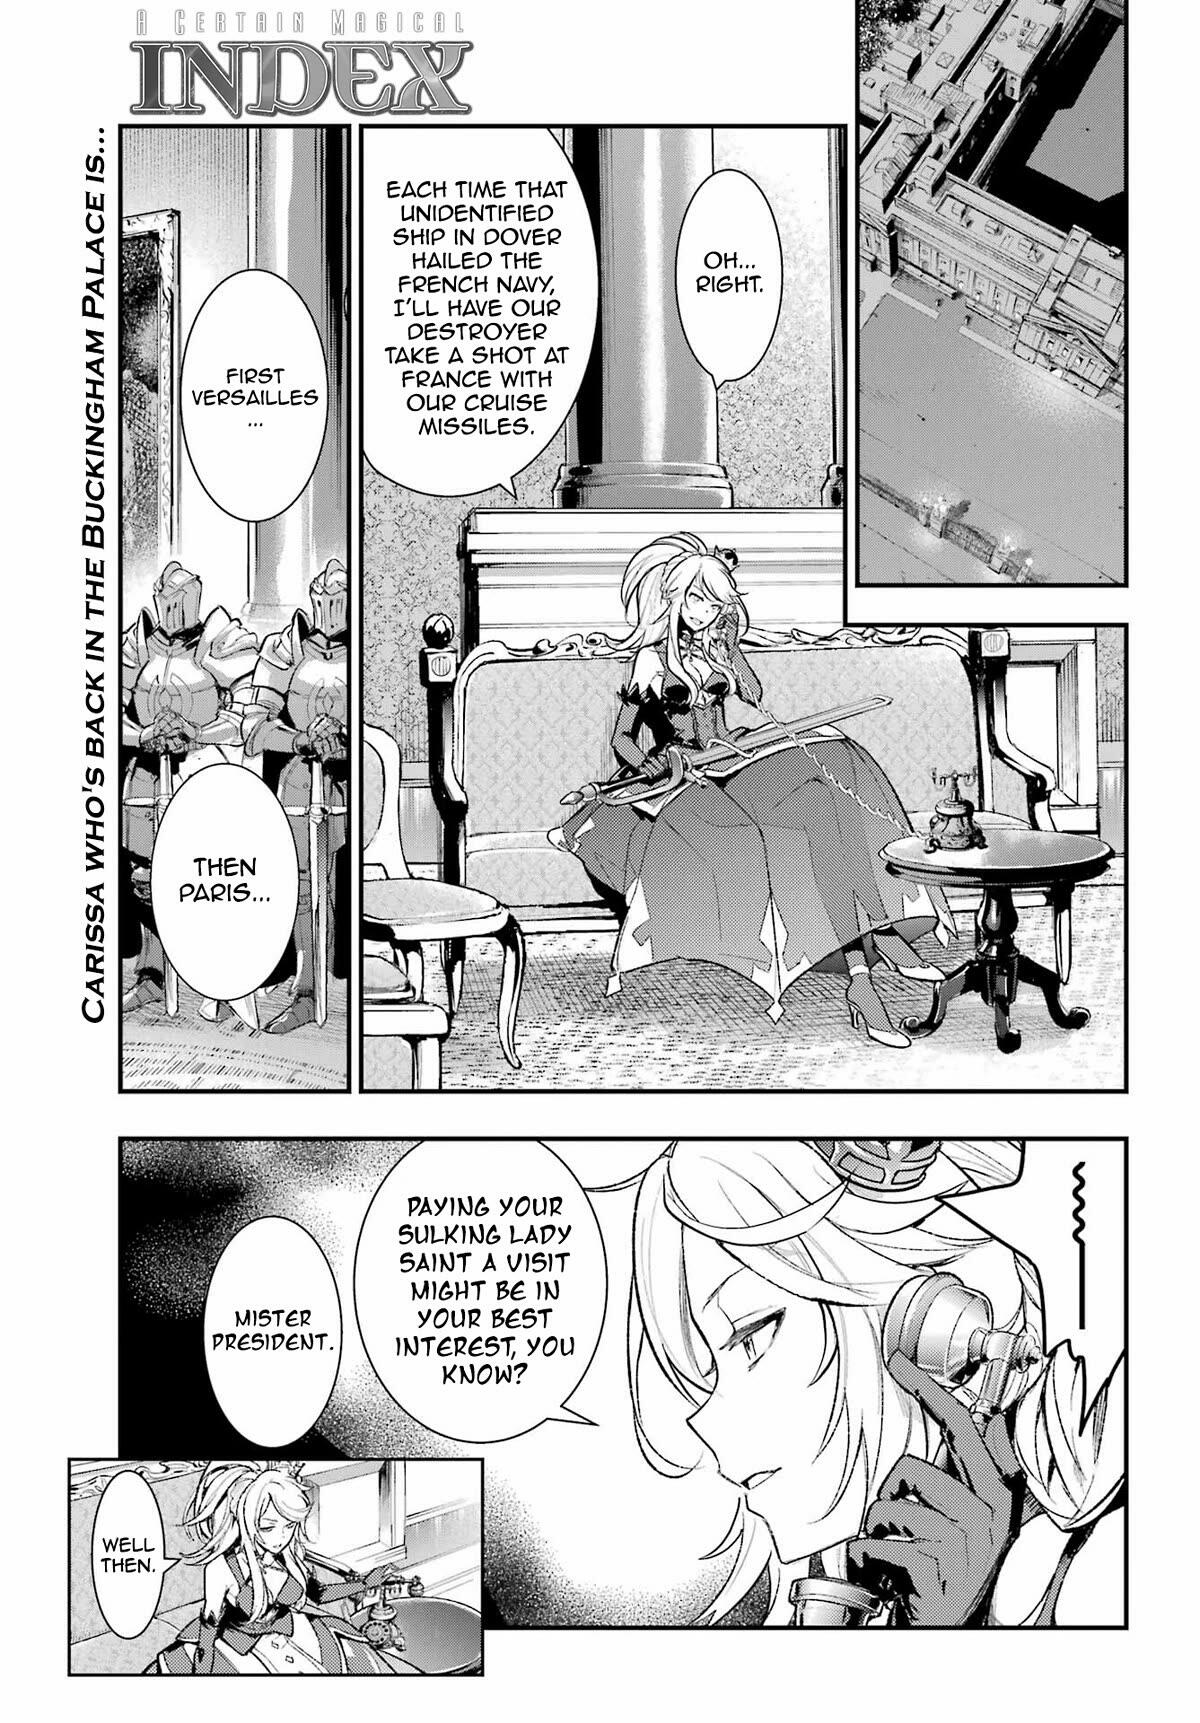 Read Magic Destroyer Chapter 1 on Mangakakalot